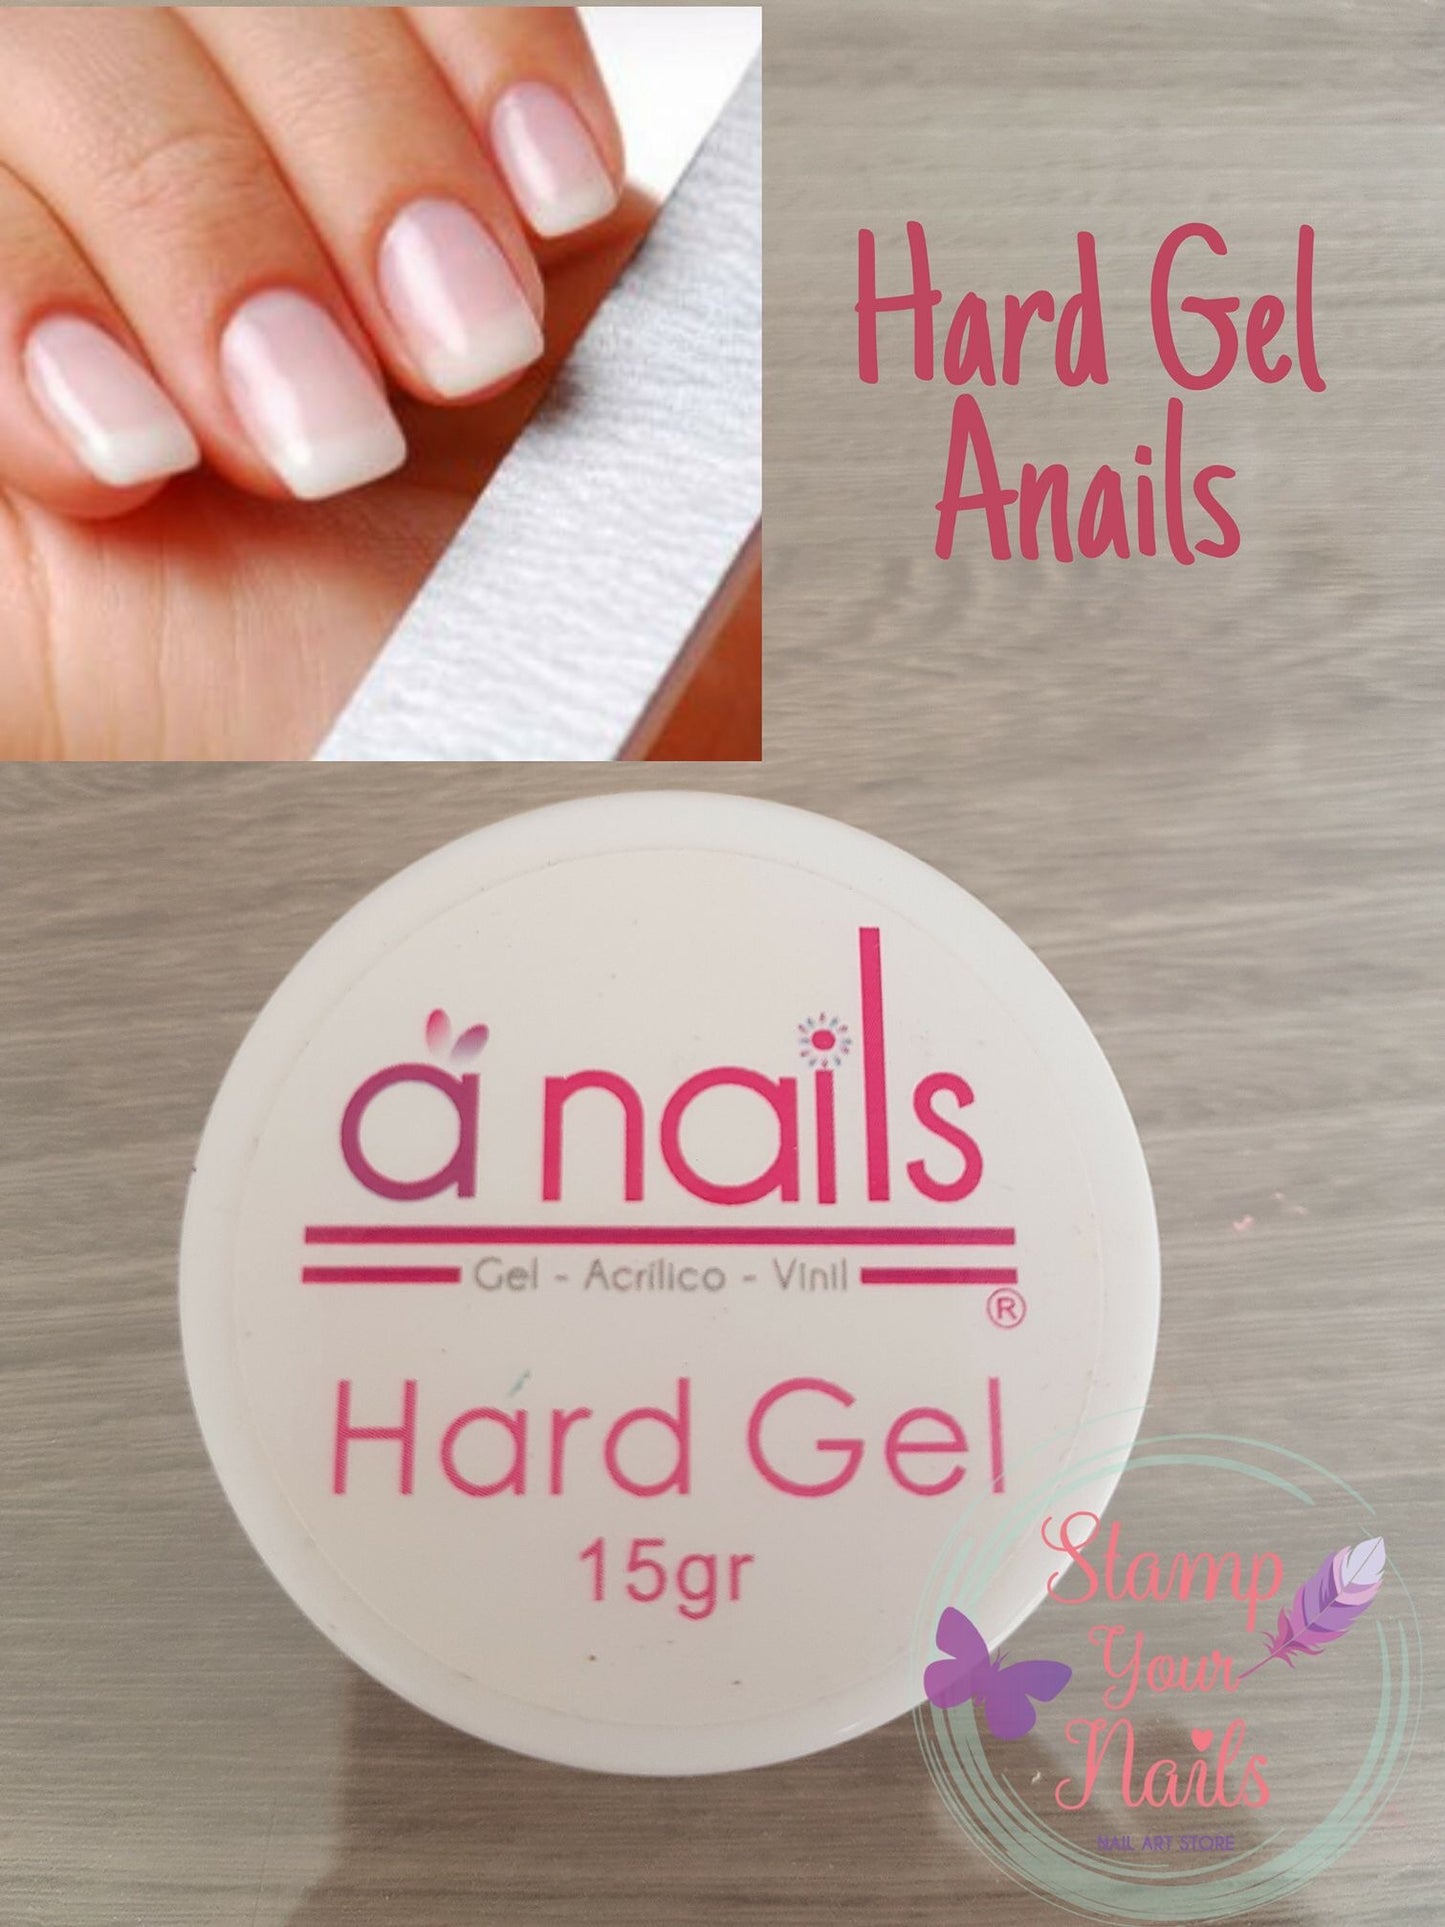 Hard gel - Stamp your nails